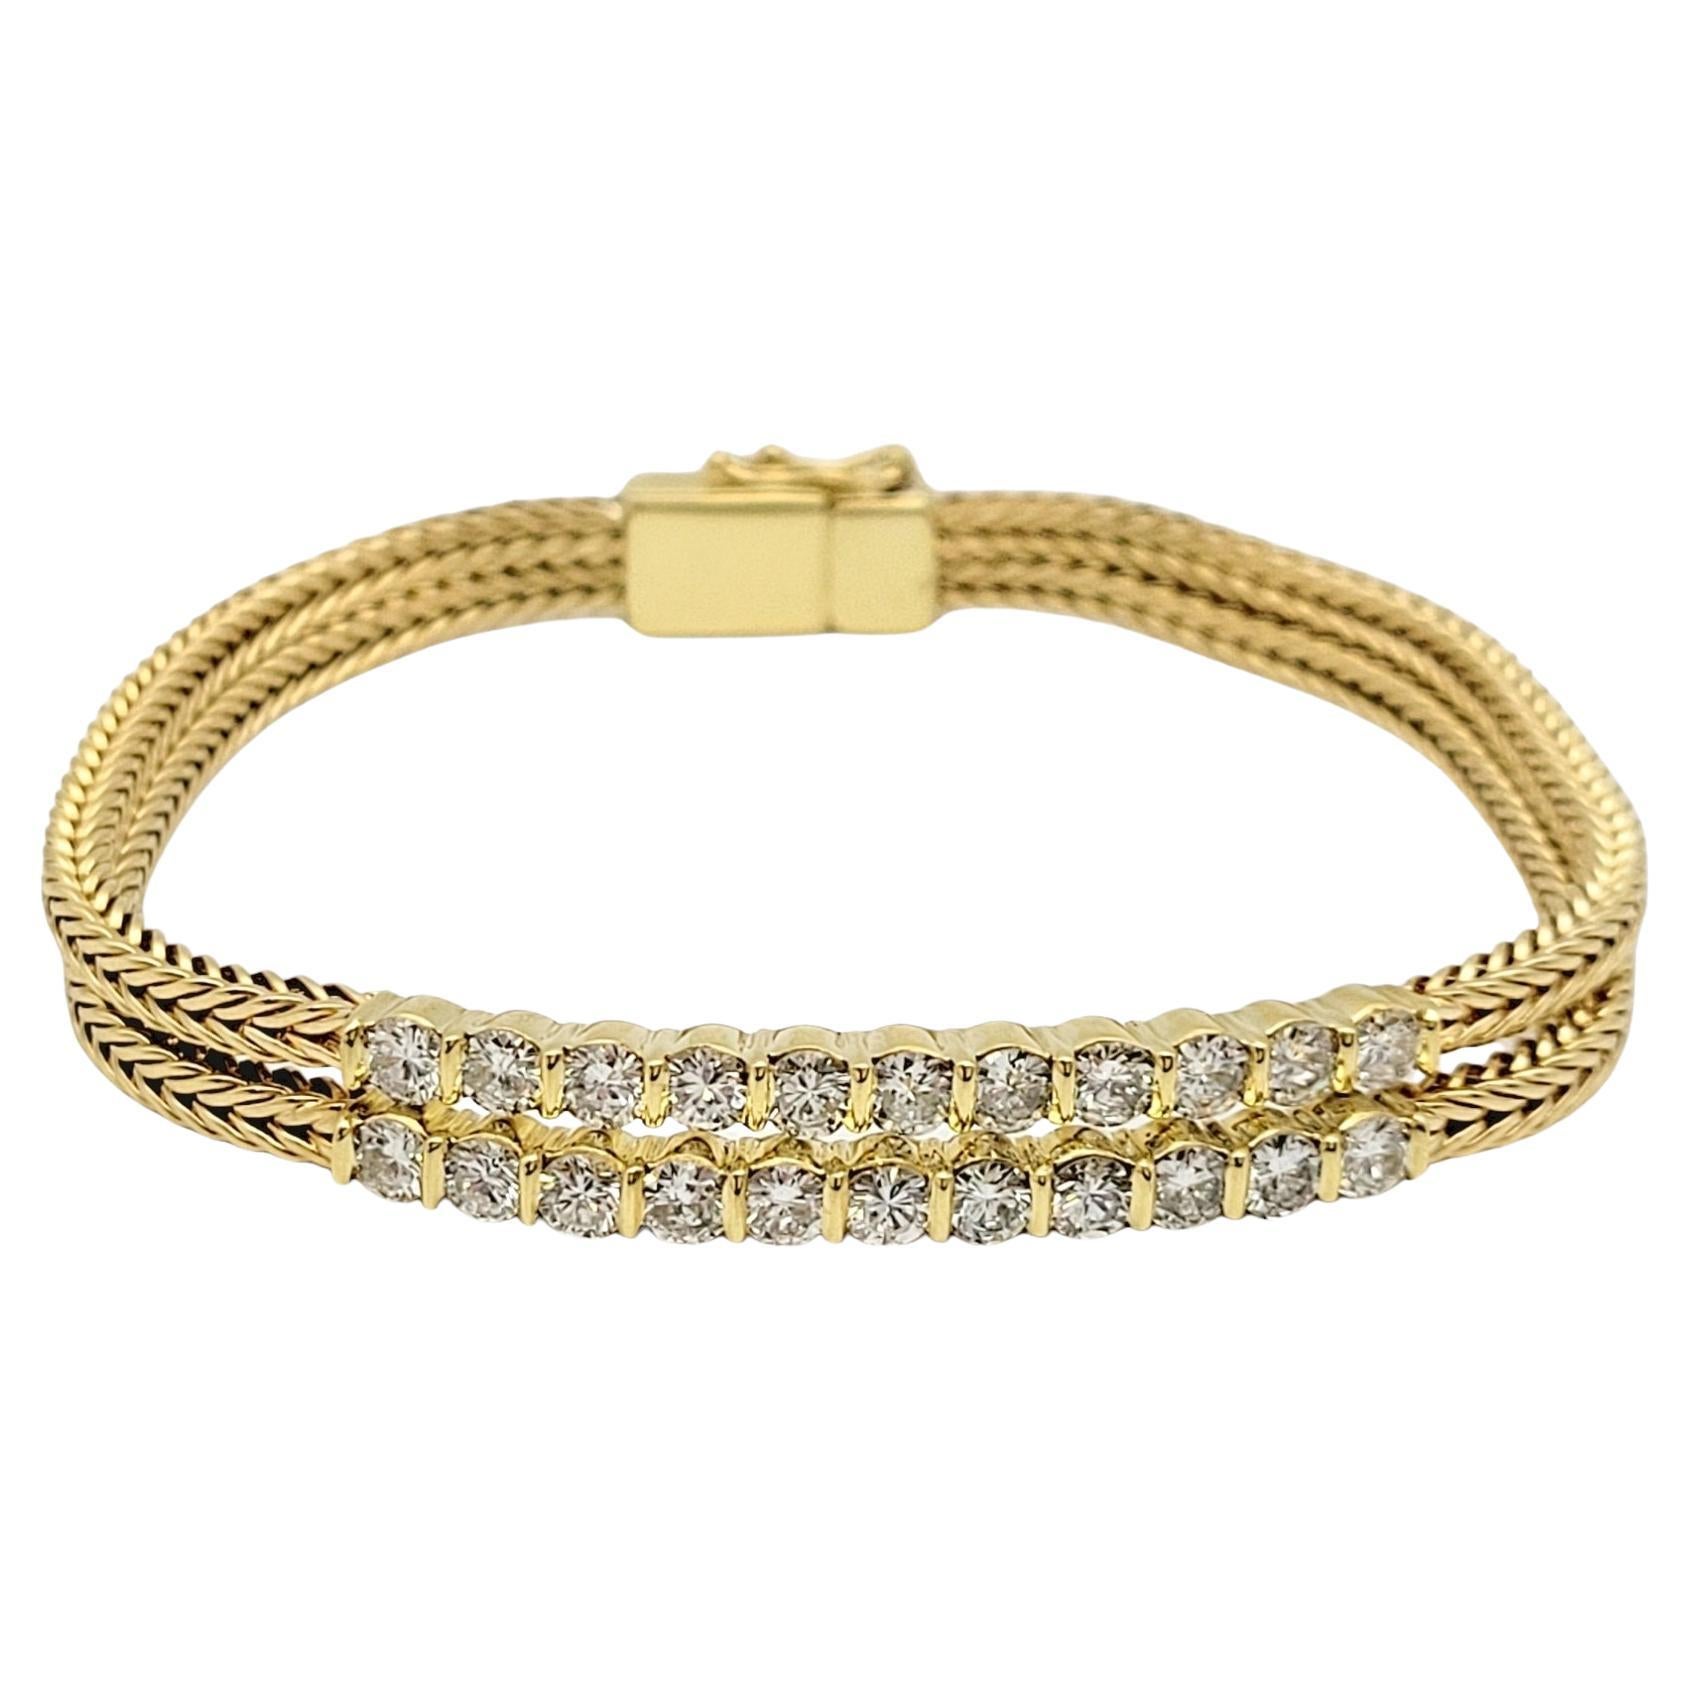 Double Strand 18 Karat Yellow Gold Box Link Bracelet with Round Diamonds 